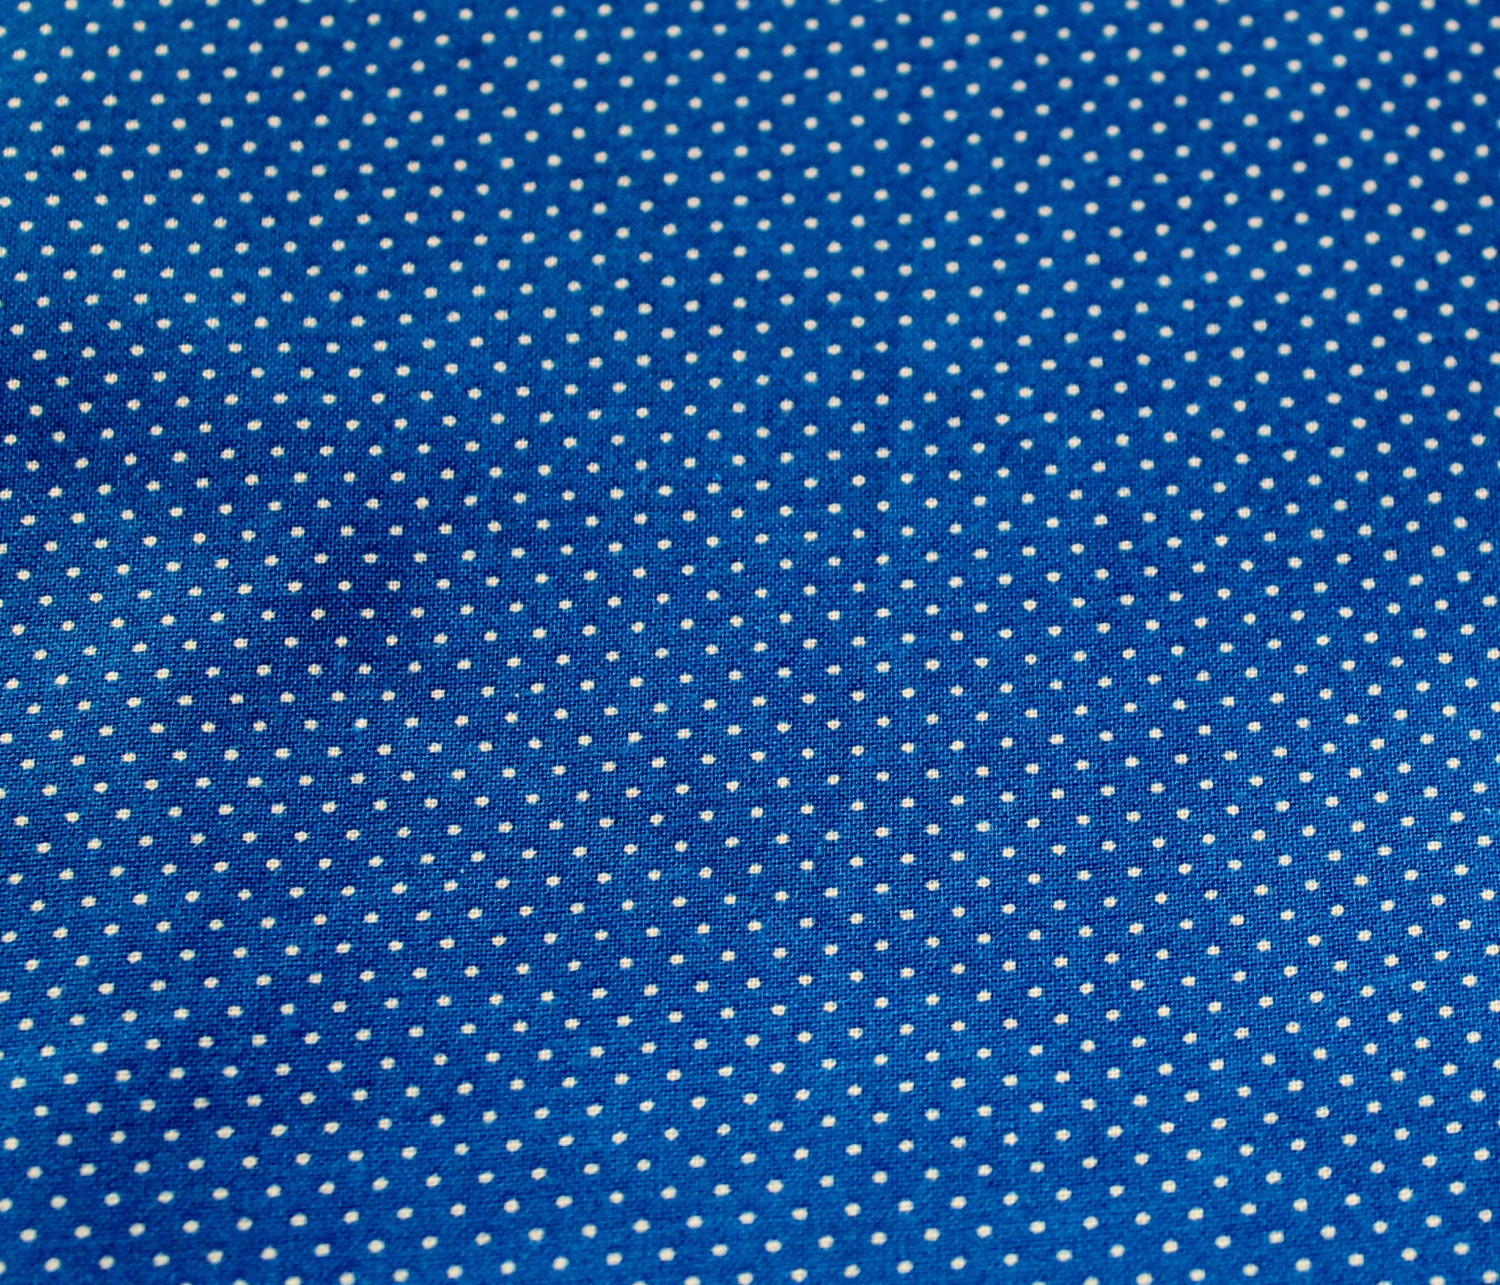 Pin Dot Fabric/Polka Dot Fabric/Royal Blue by EmbellishByAndrea